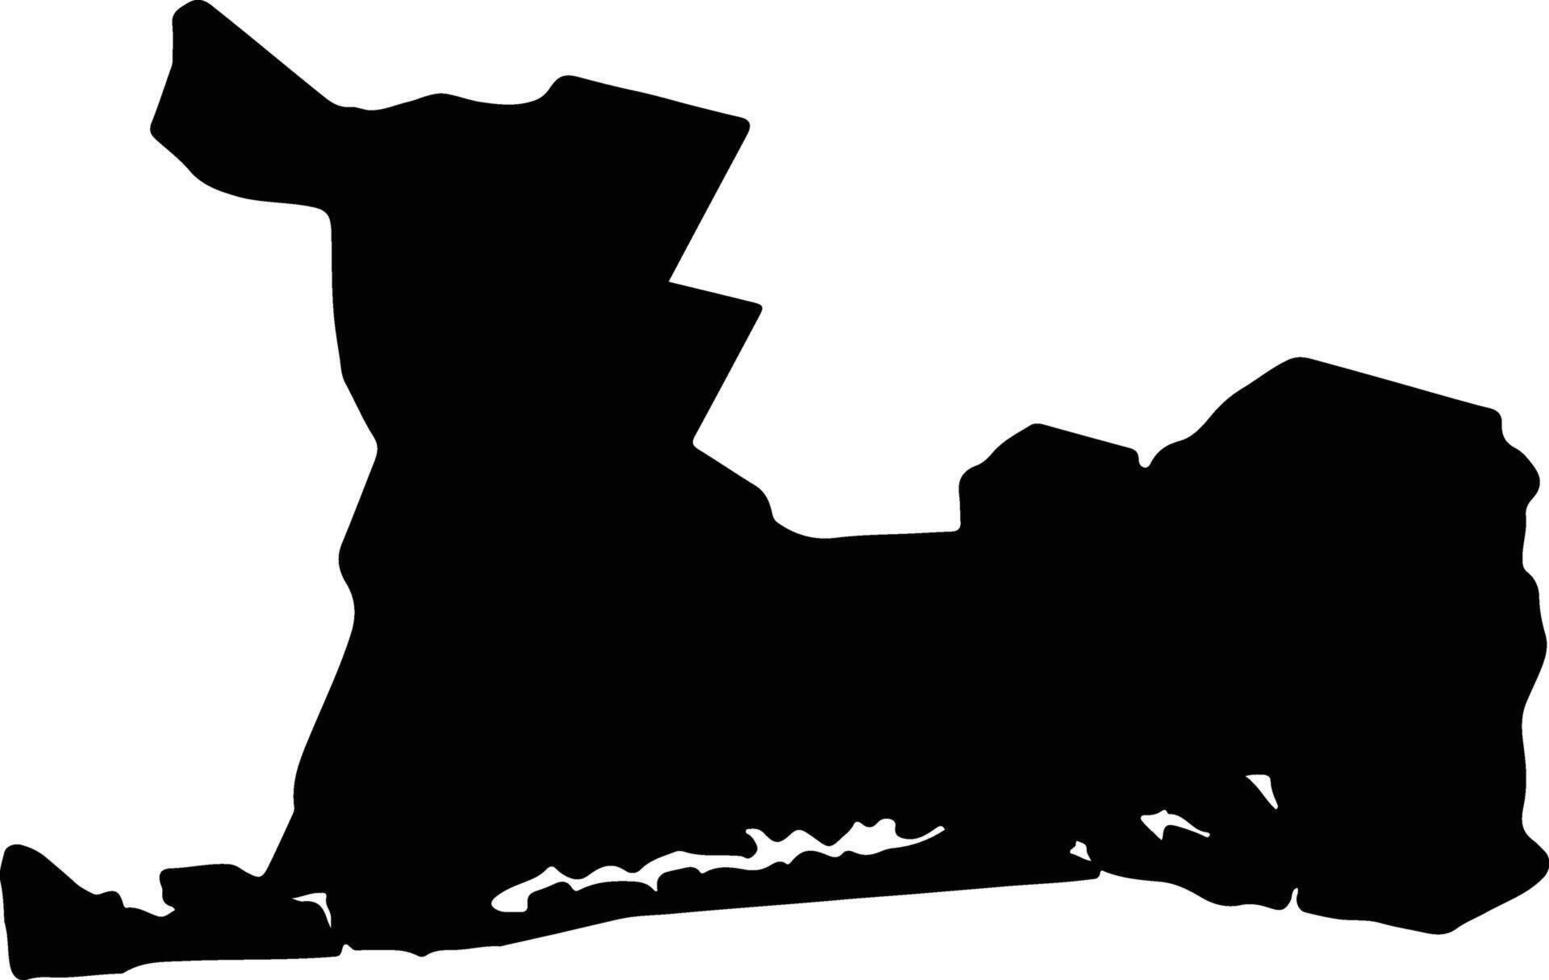 Lagunes Ivory Coast silhouette map vector